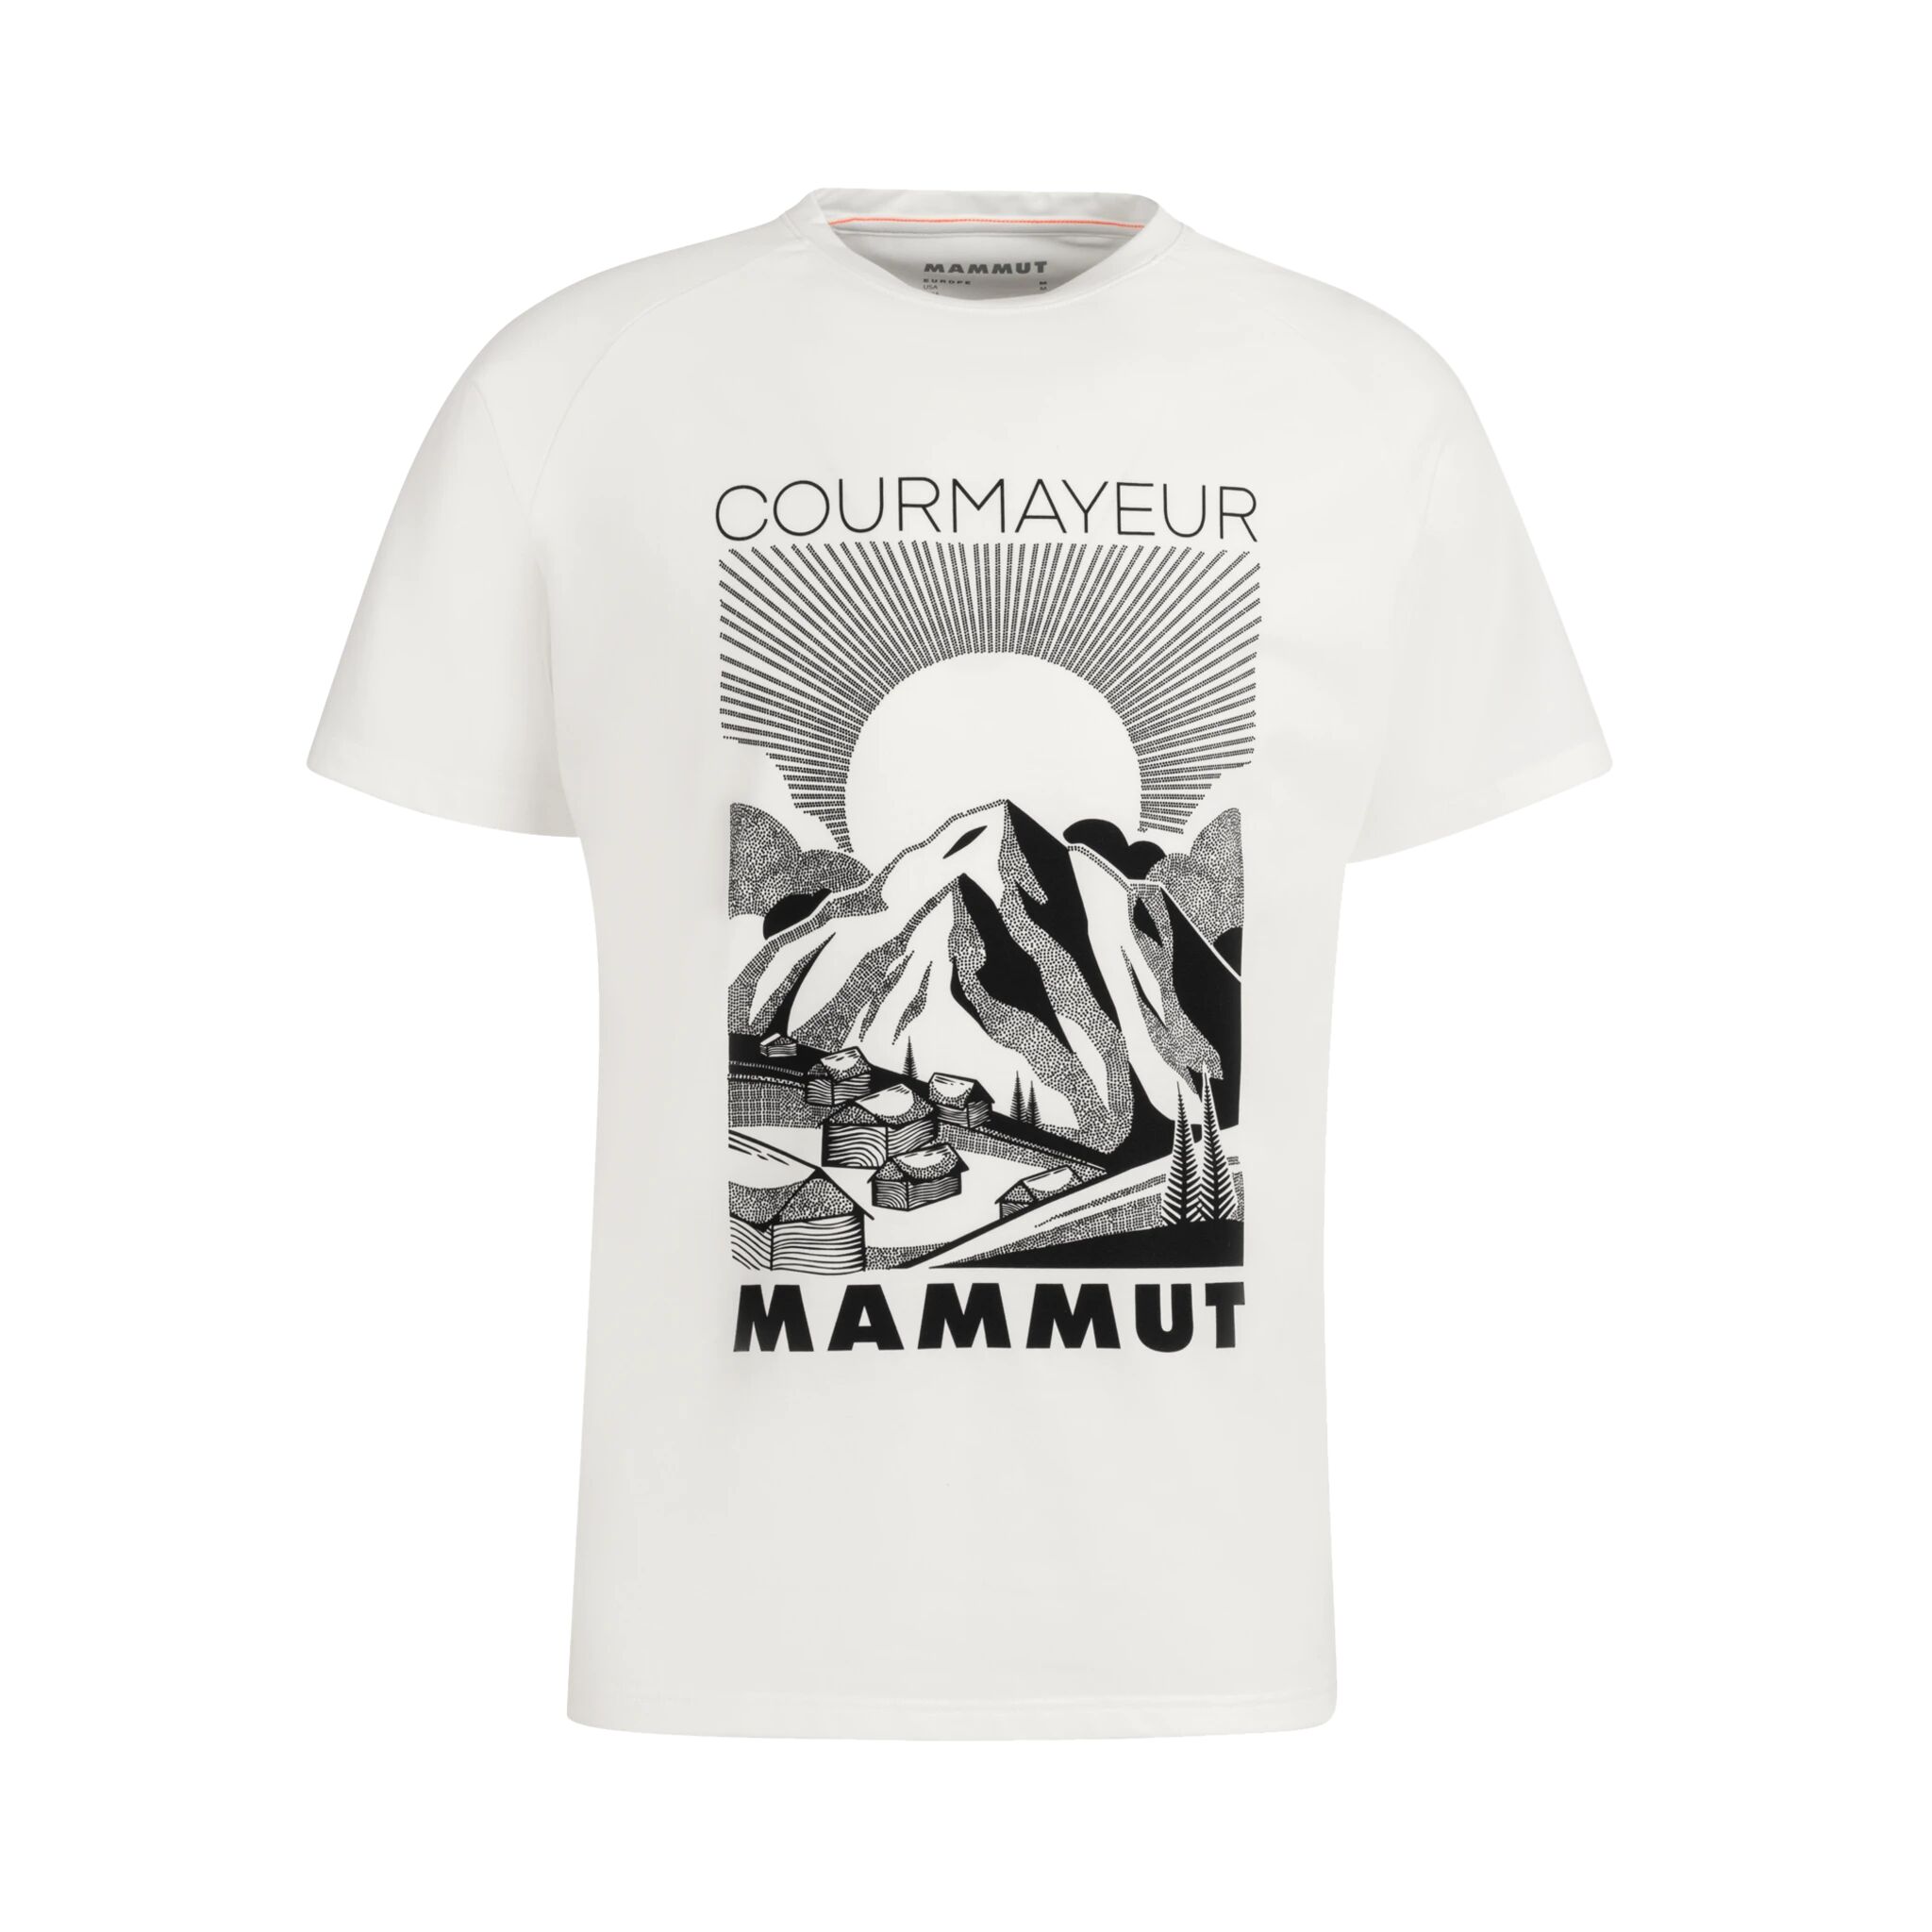 Mammut Mountain T-shirt Men L White Prt3